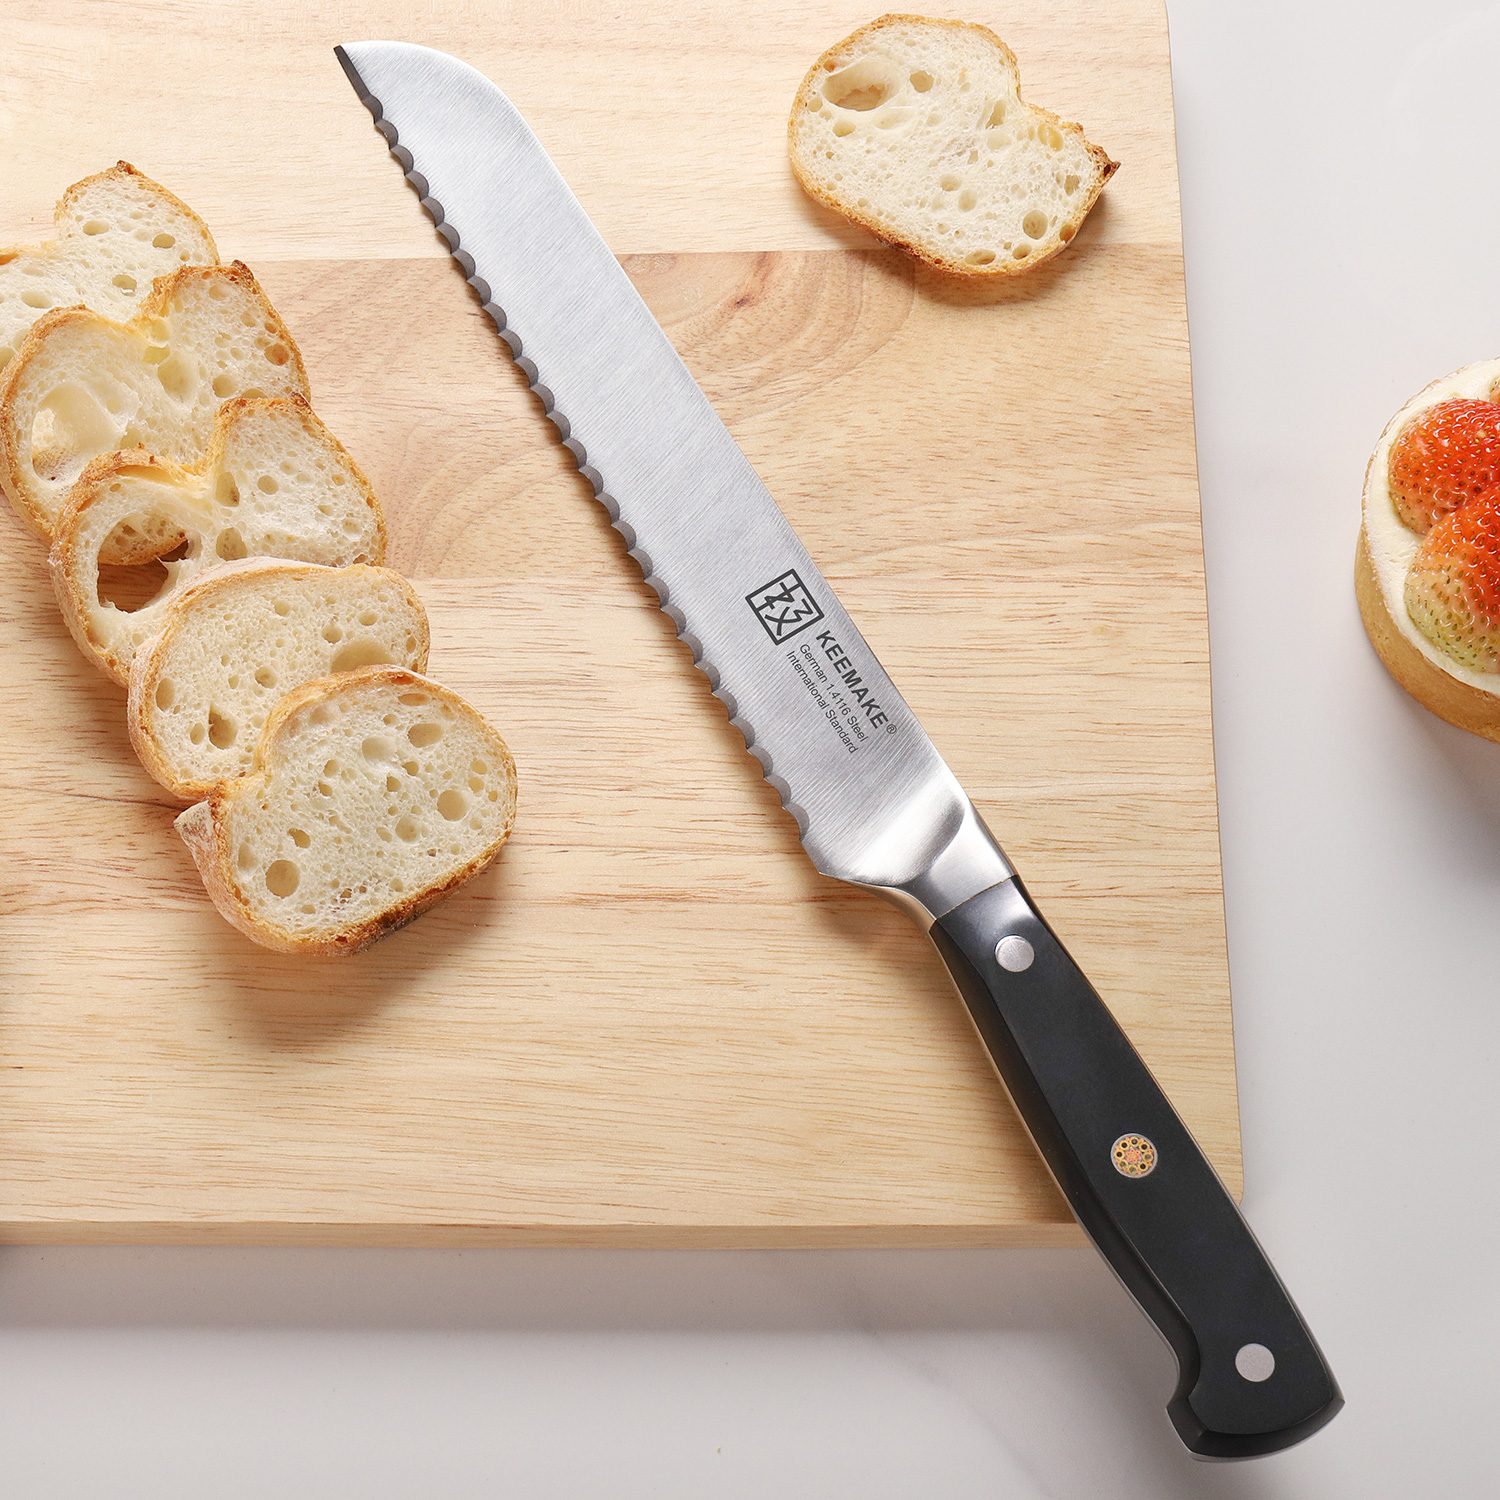 KEEMAKE Bread Knife 8 inch, Serrated Bread Knife for Homemade Bread